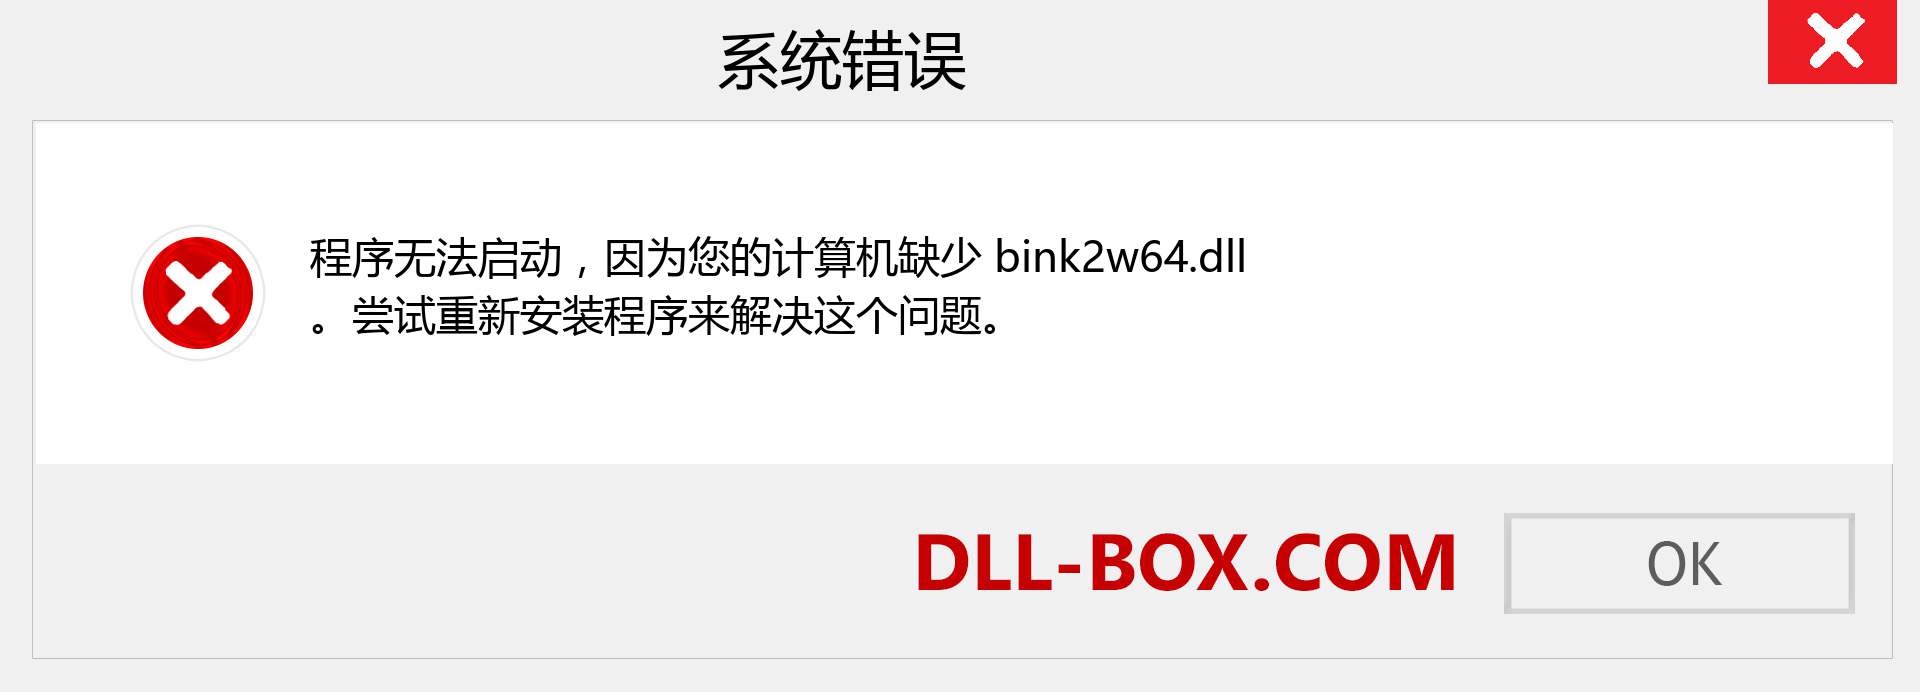 bink2w64.dll 文件丢失？。 适用于 Windows 7、8、10 的下载 - 修复 Windows、照片、图像上的 bink2w64 dll 丢失错误